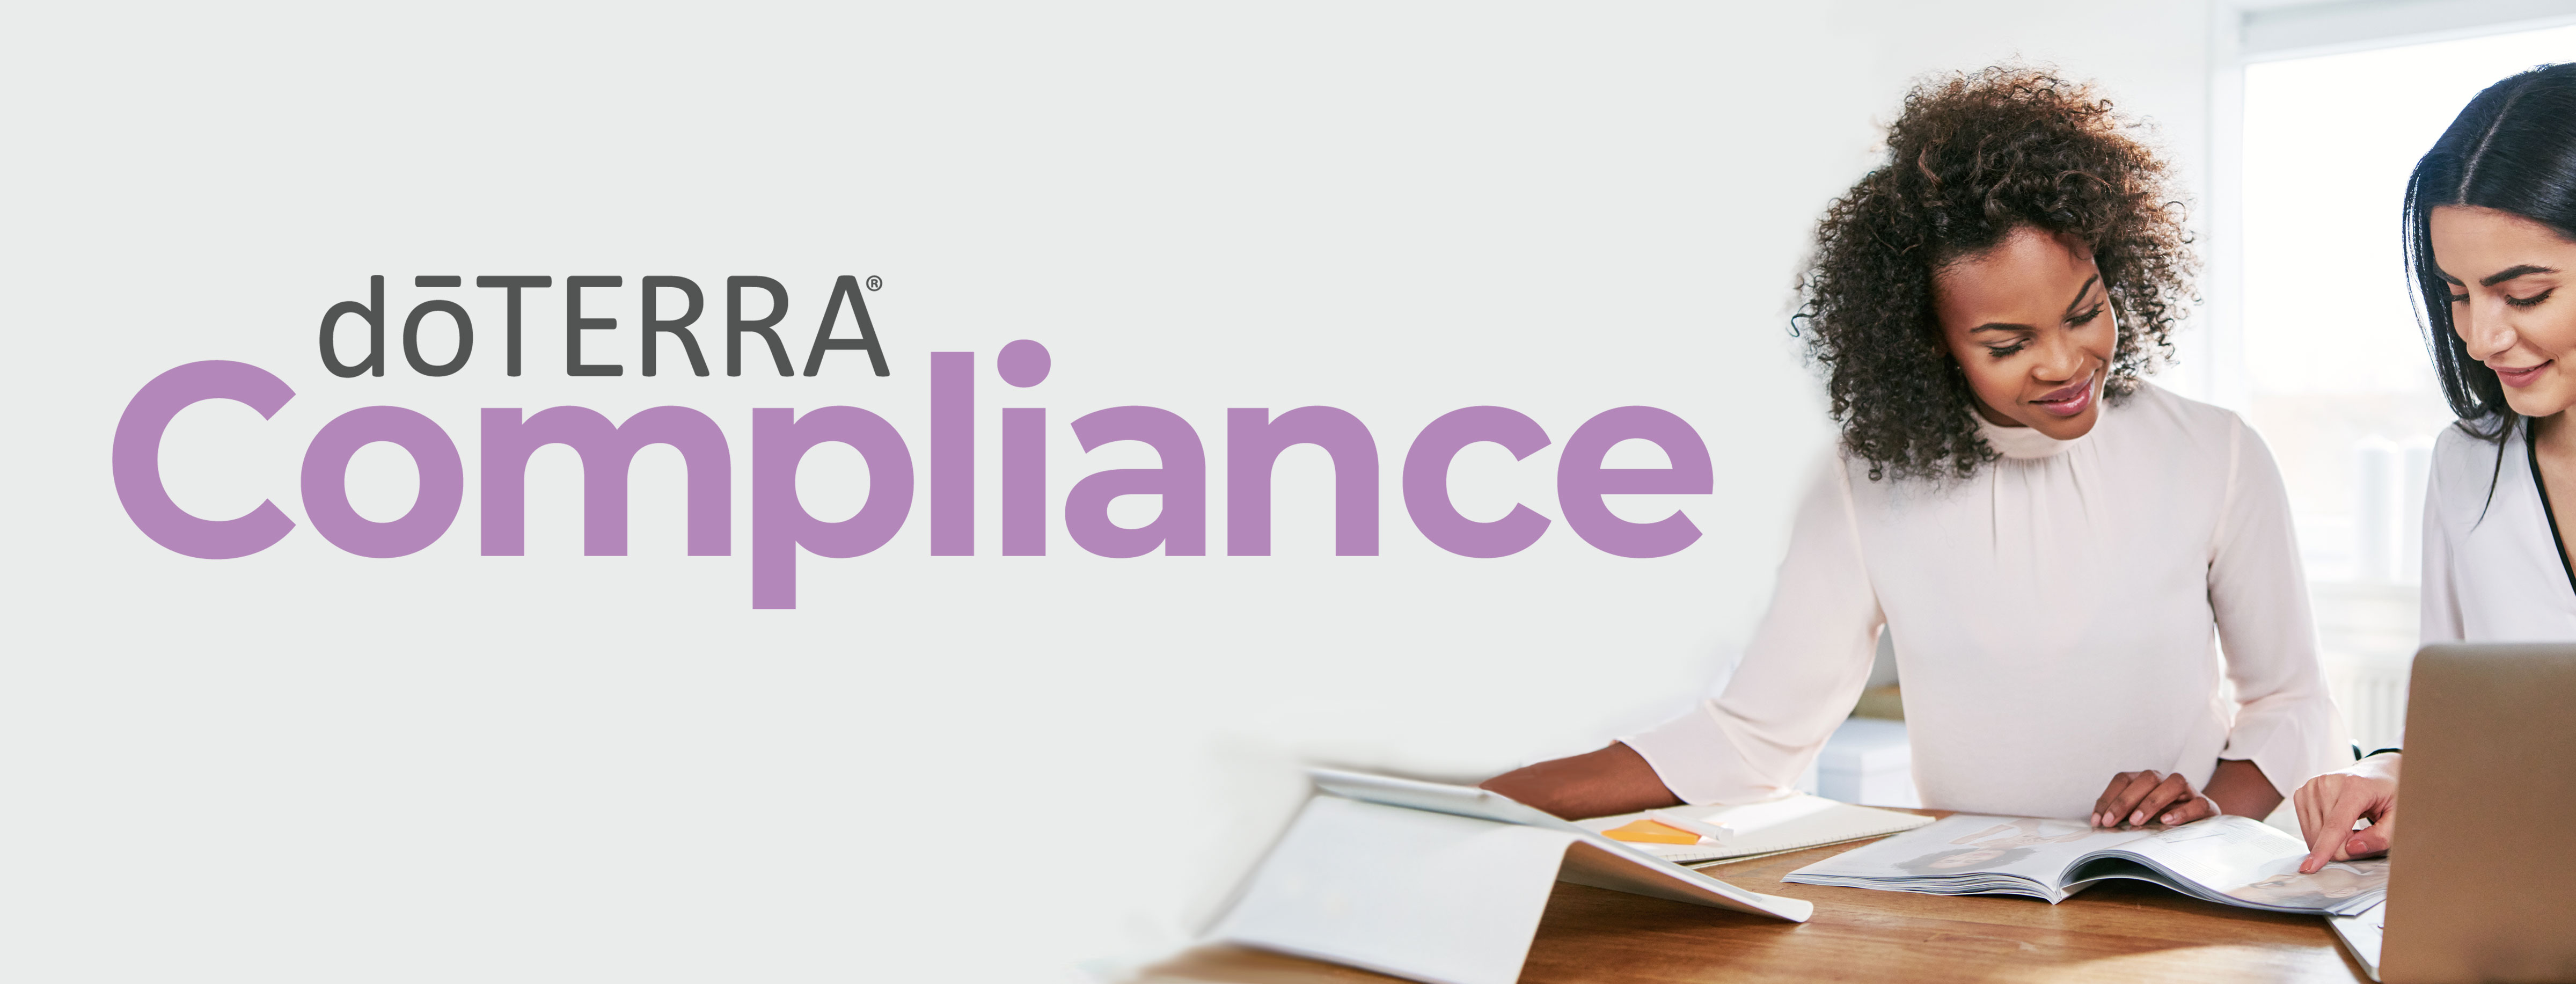 Compliance Logo